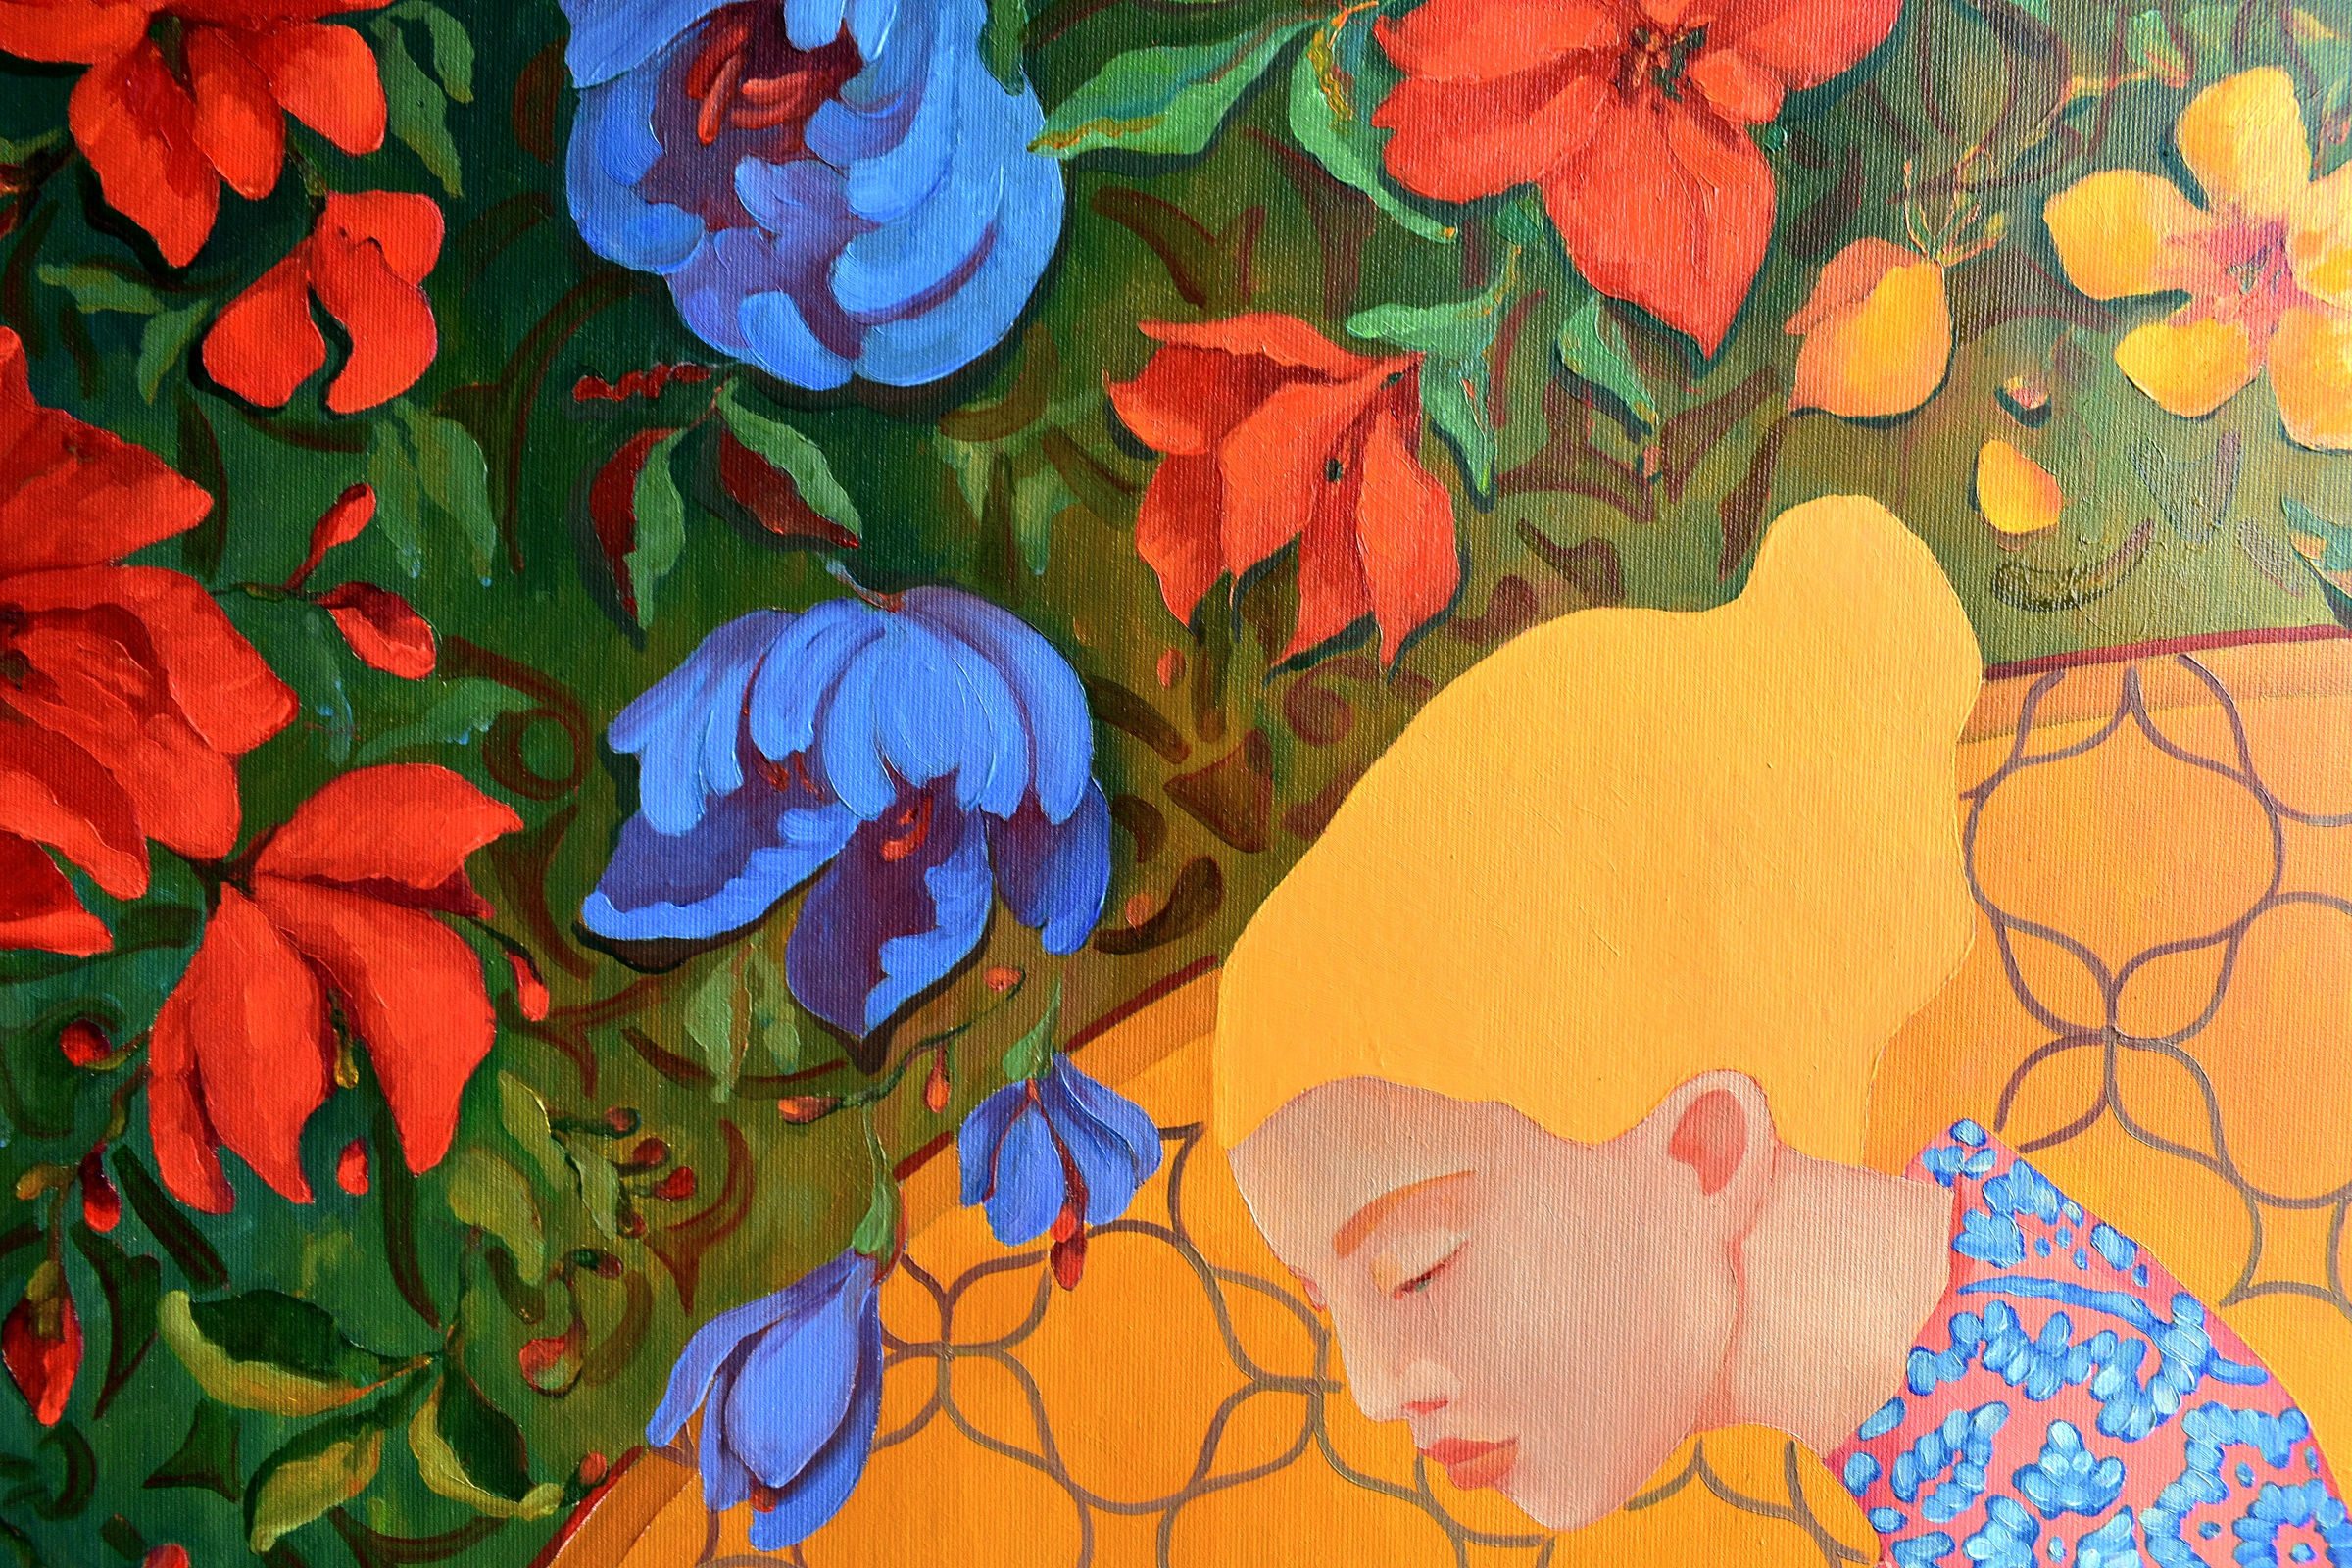 Painting by Marina Venediktova Mystical garden detail